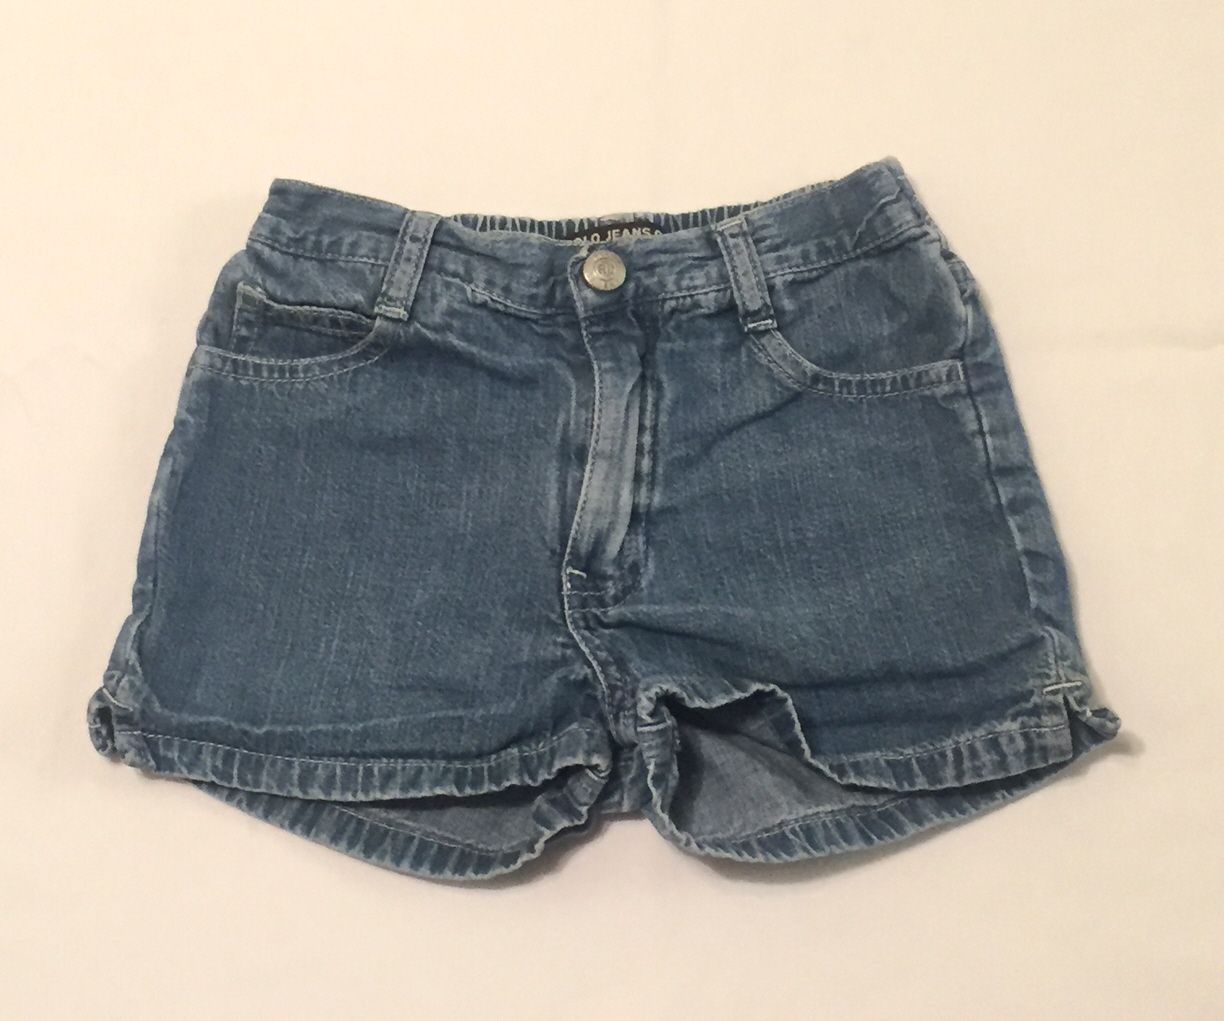 Ralph Lauren Polo Jeans Co toddler girl's denim shorts 3T vintage 1990s - Bottoms